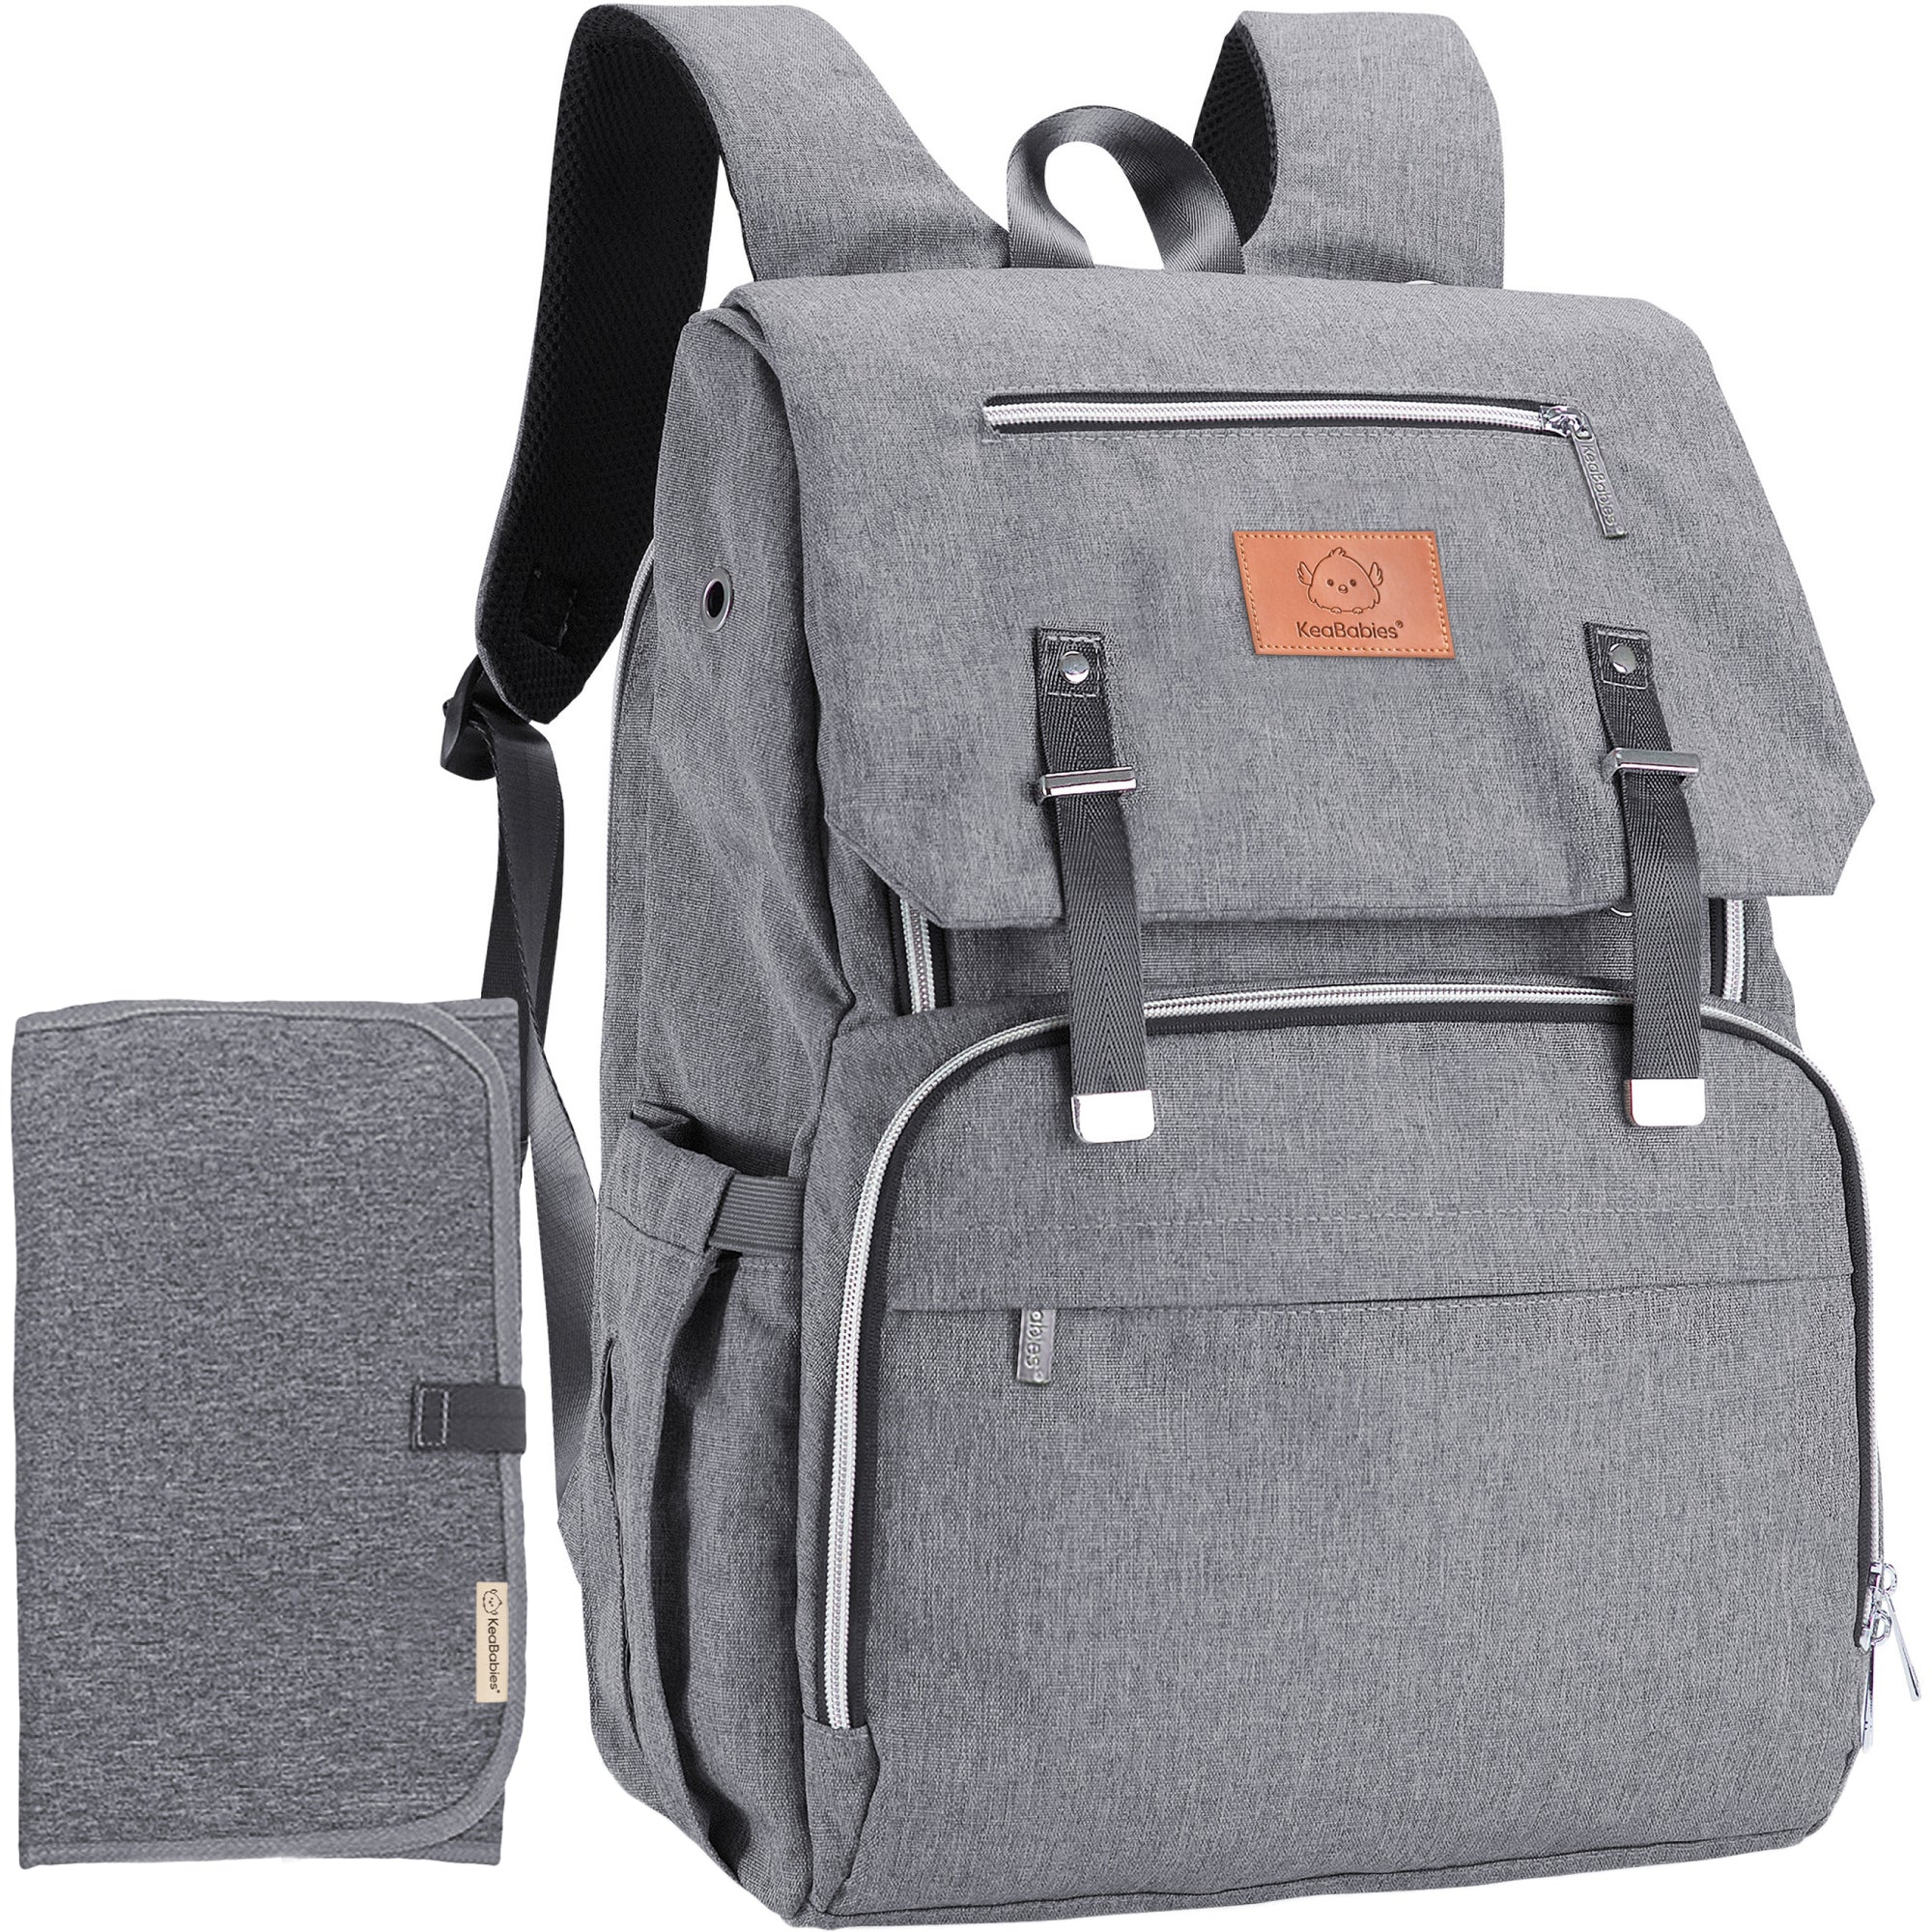 KeaBabies Explorer Diaper Bag Backpack, Baby Bags, Changing Pad, Stroller Straps - image 1 of 10